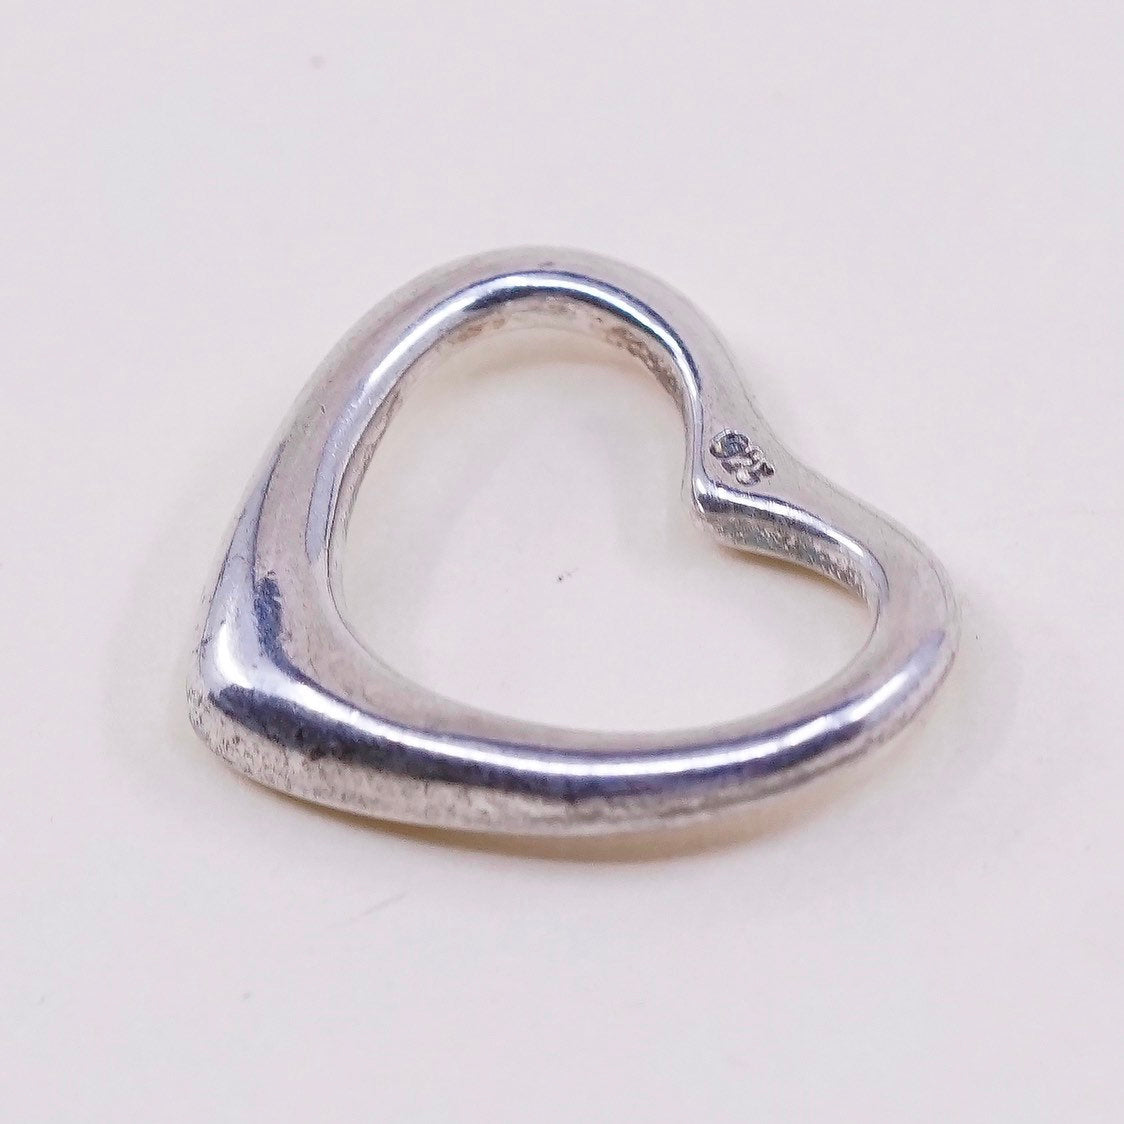 Vintage sterling silver handmade pendant, heart shaped, fine 925 silver heart